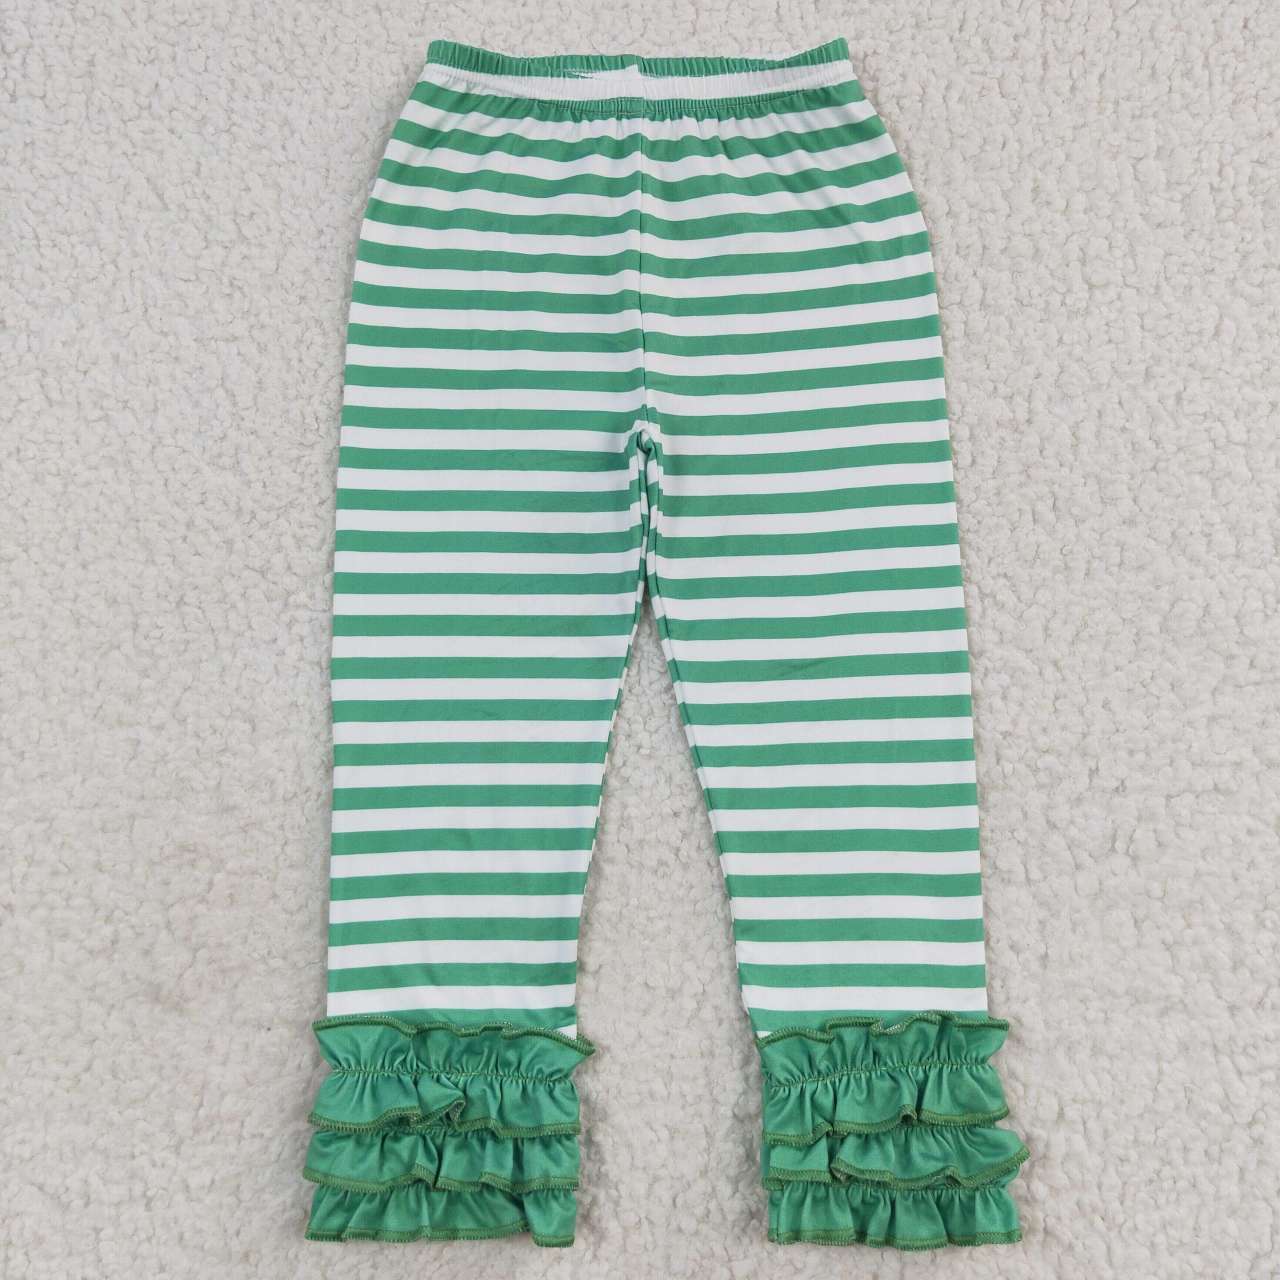 P0175 Green stripes girls legging pants